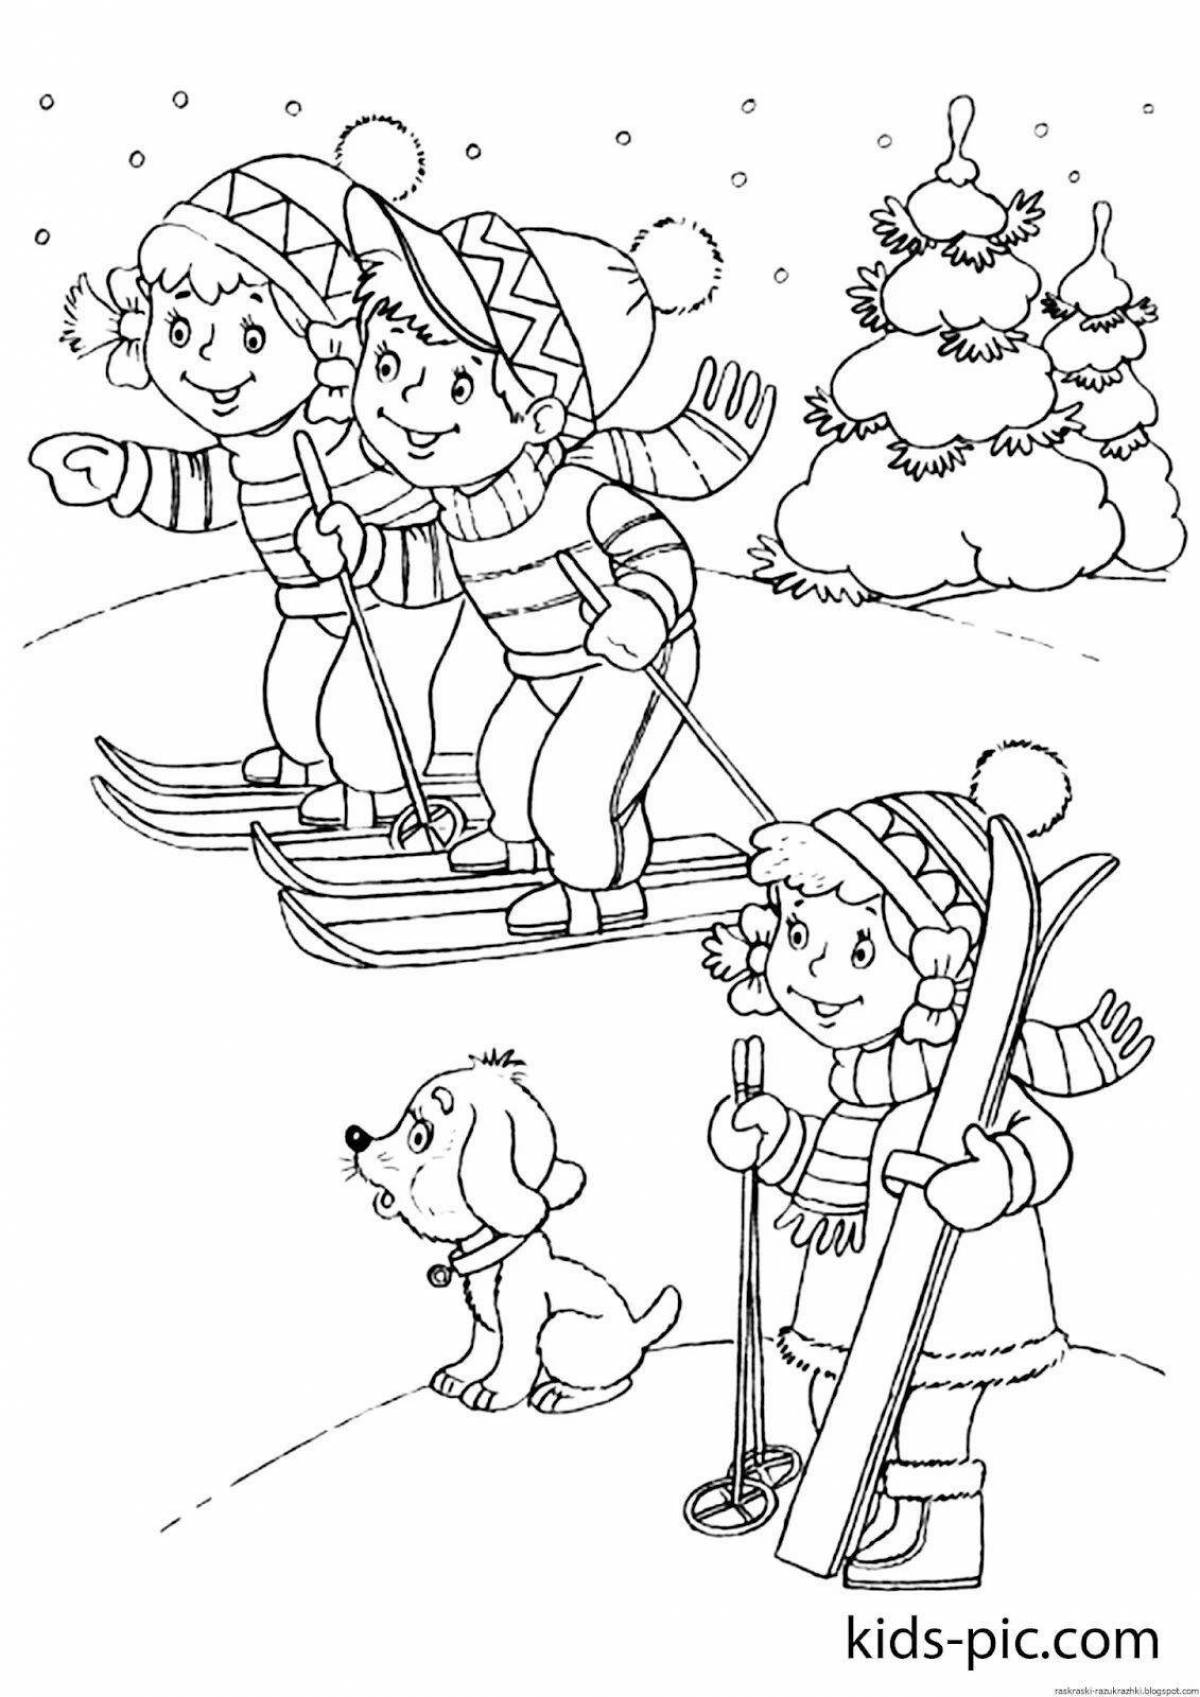 Glitter winter fun coloring book